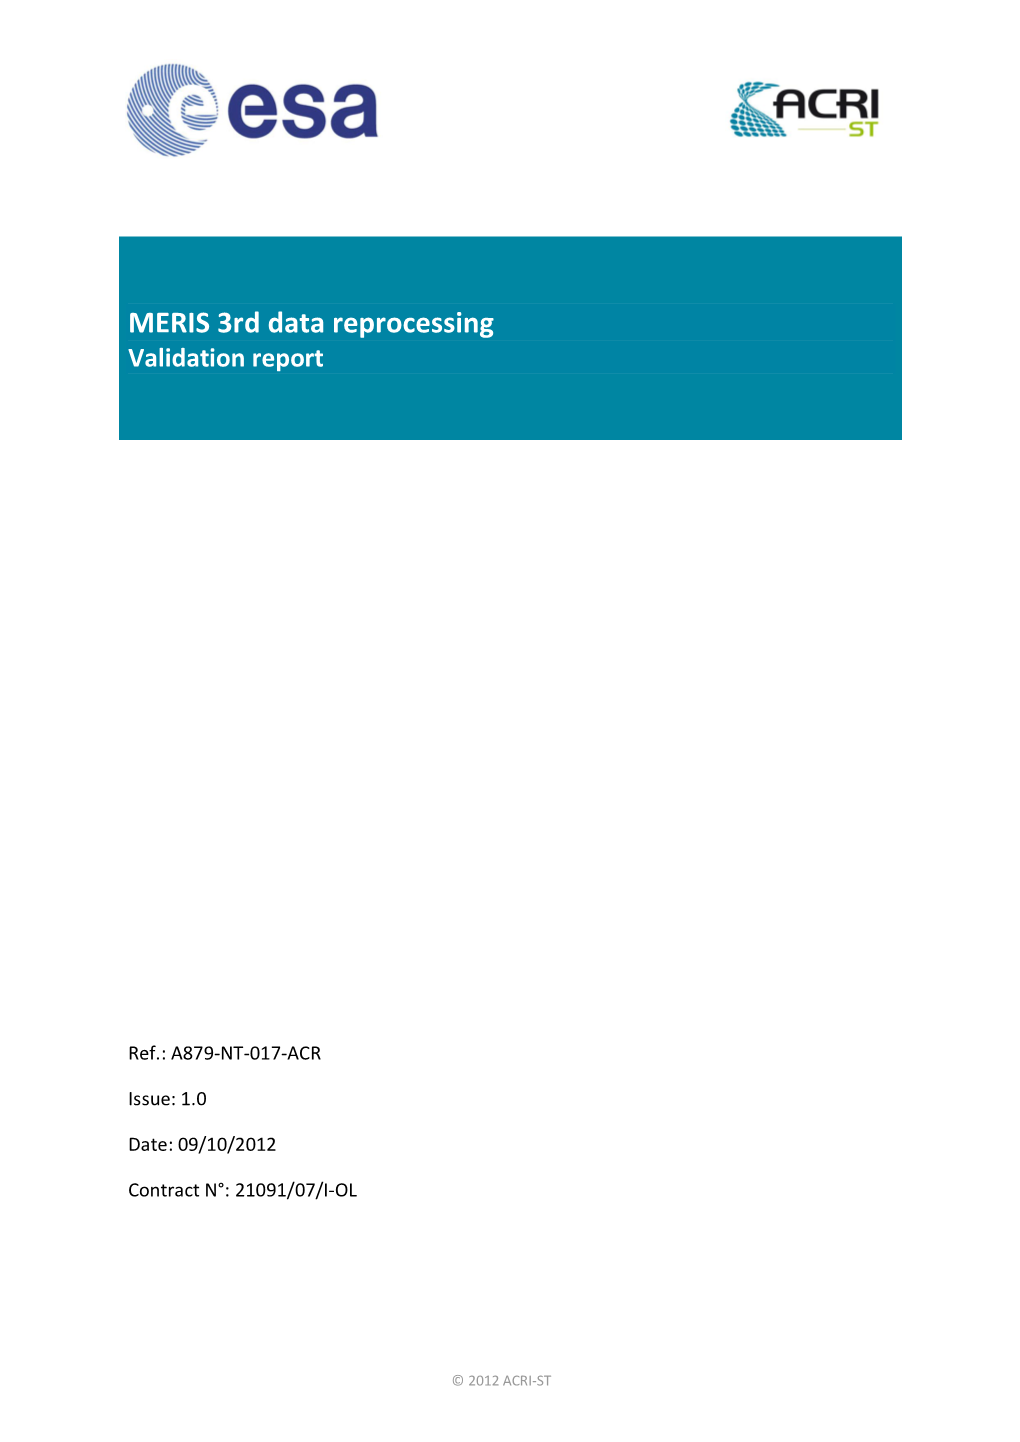 MERIS 3Rd Data Reprocessing Validation Report